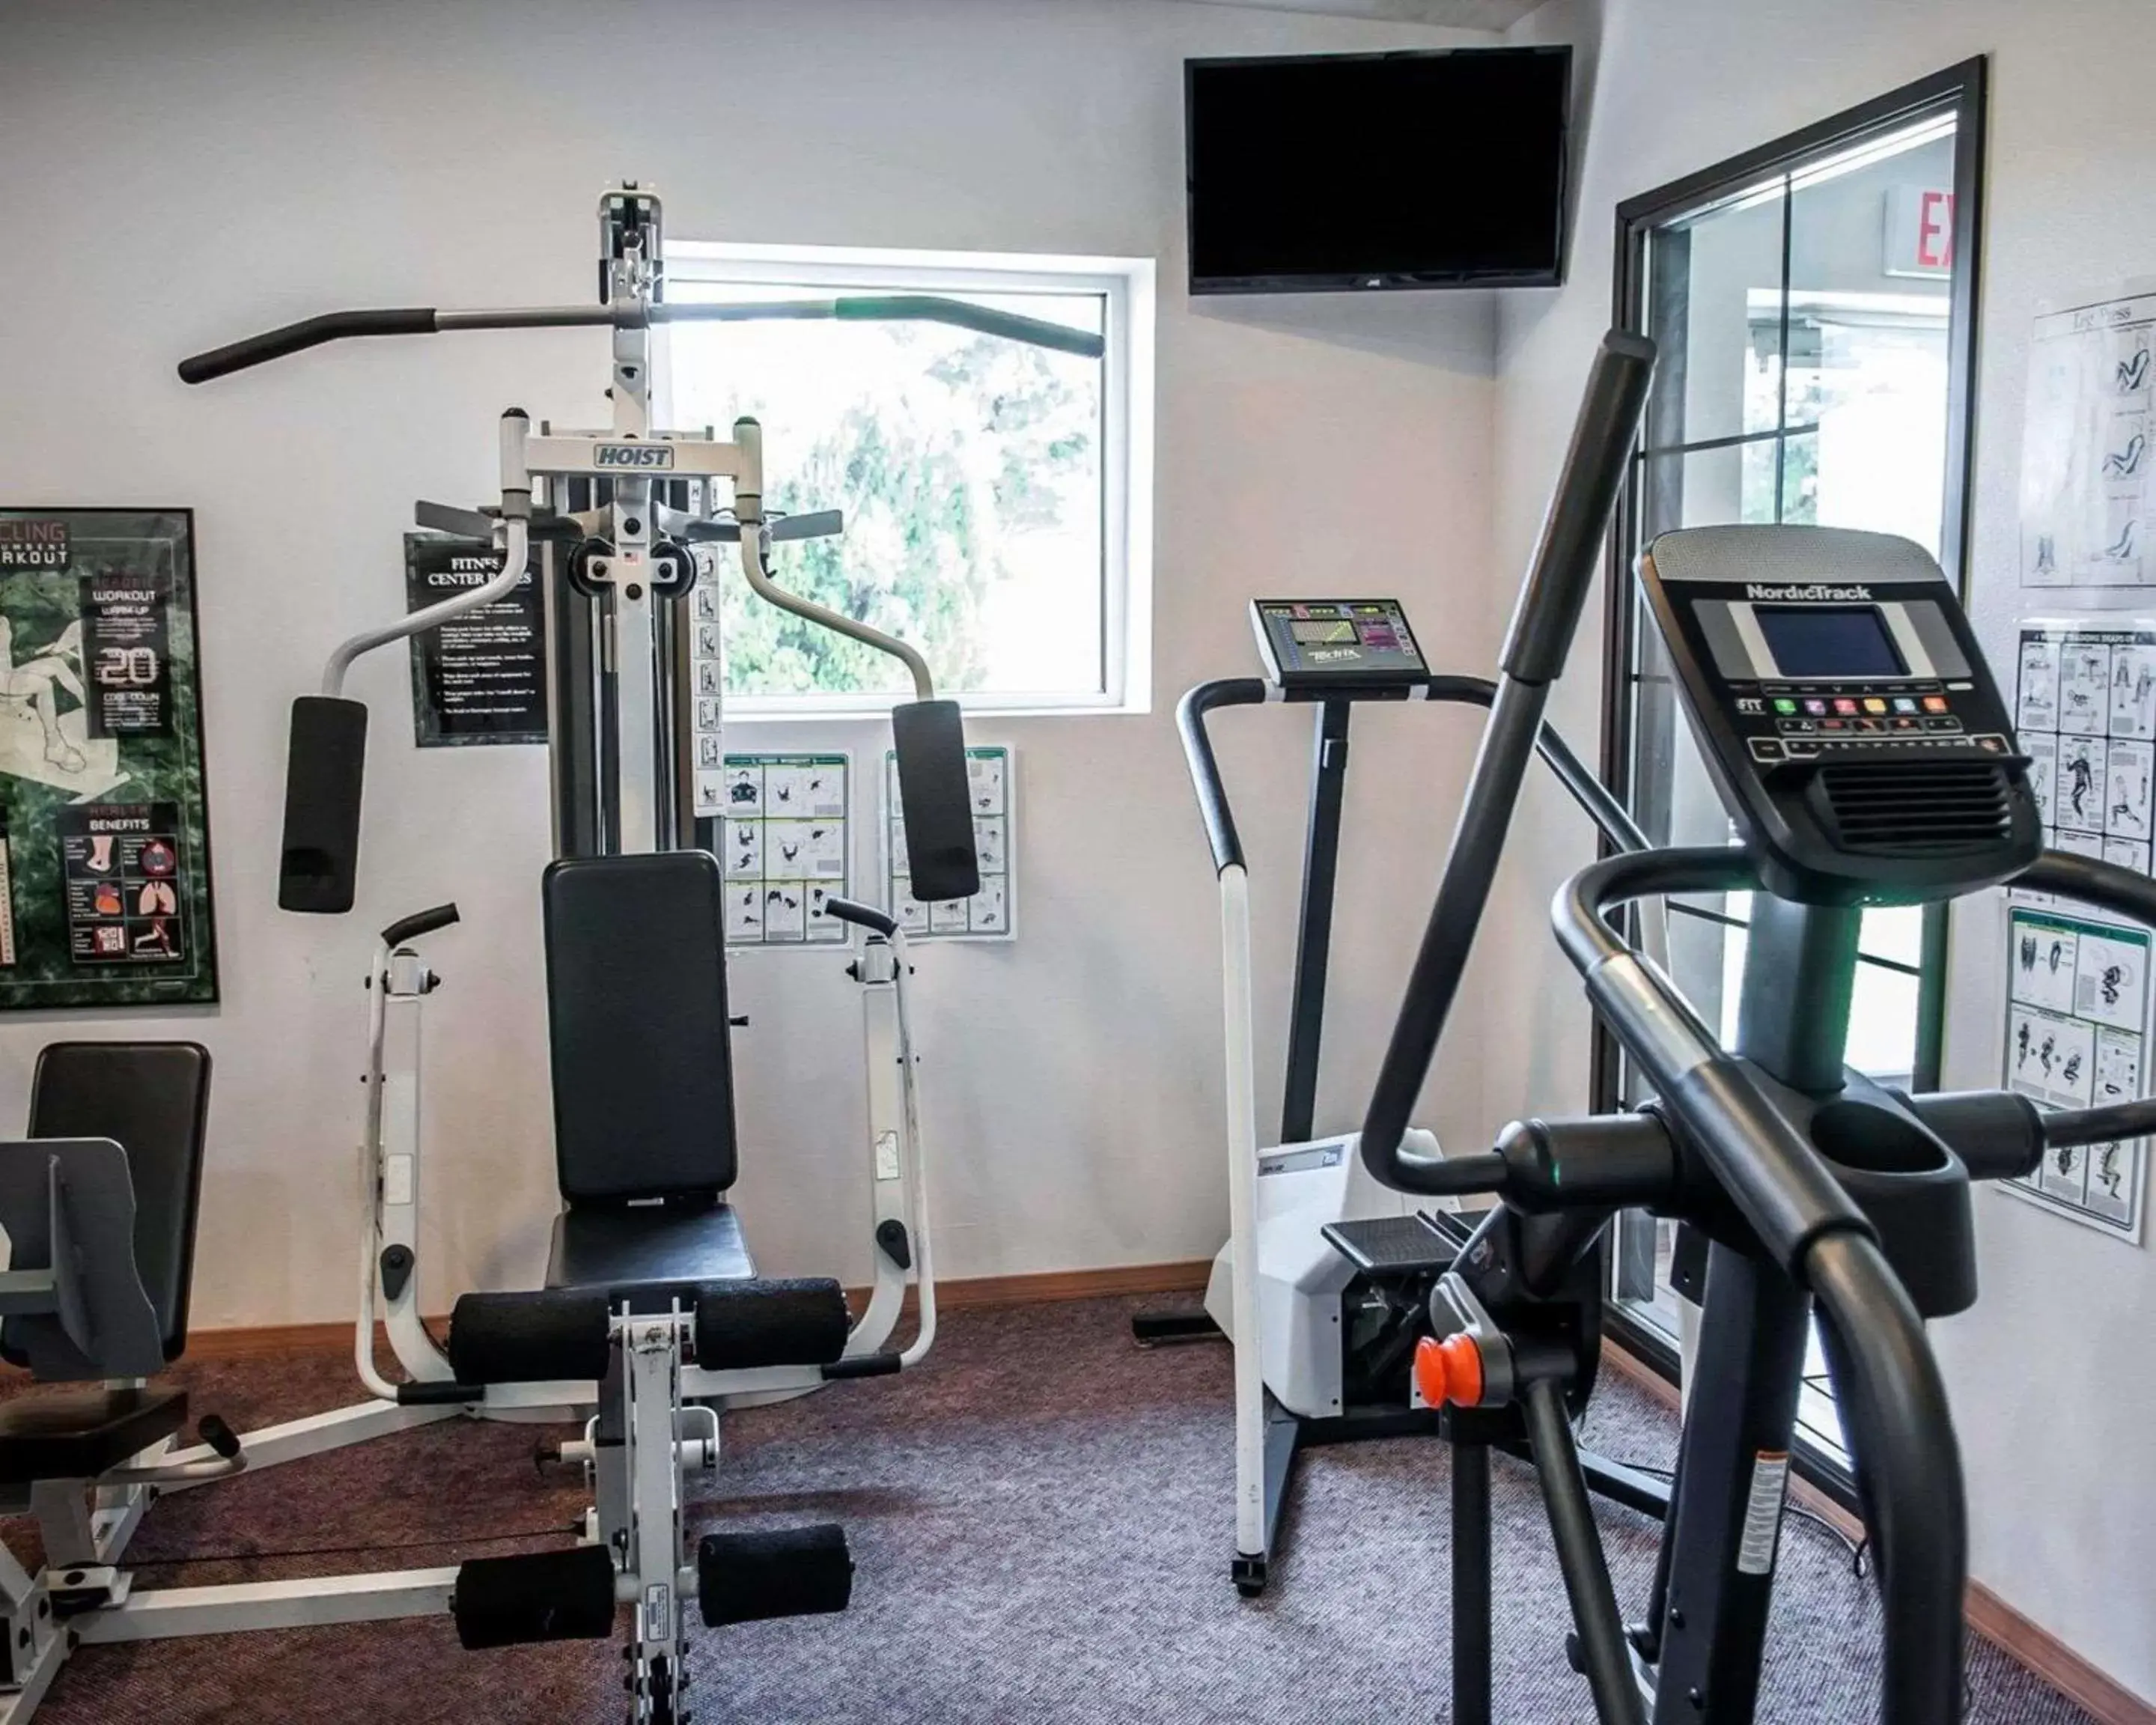 Fitness centre/facilities, Fitness Center/Facilities in Quality Inn Tucumcari